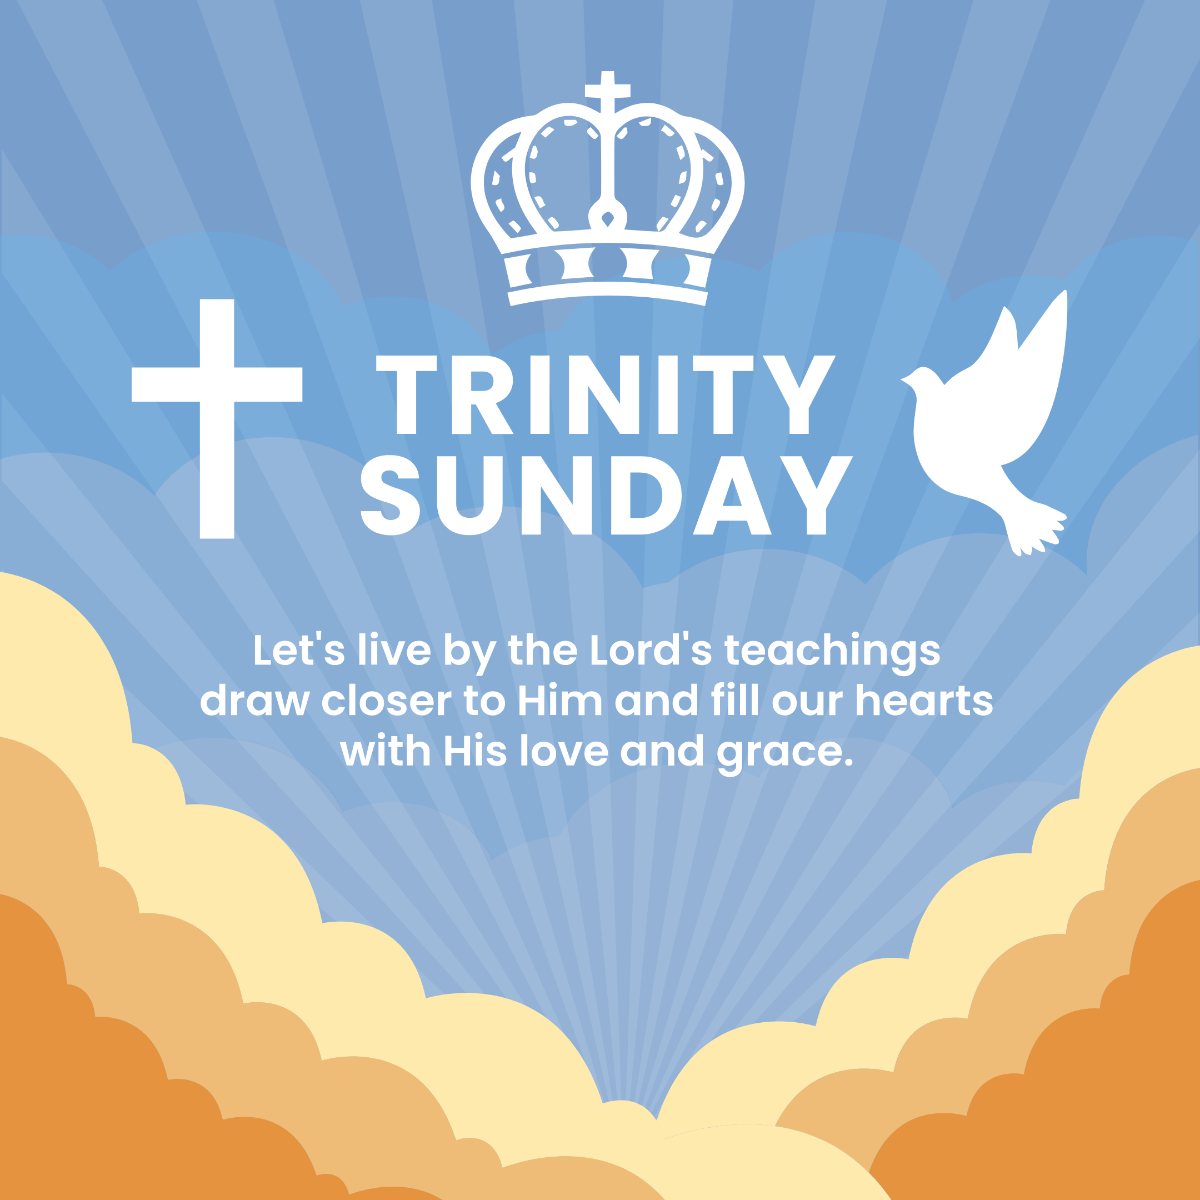 Trinity Sunday Instagram Post